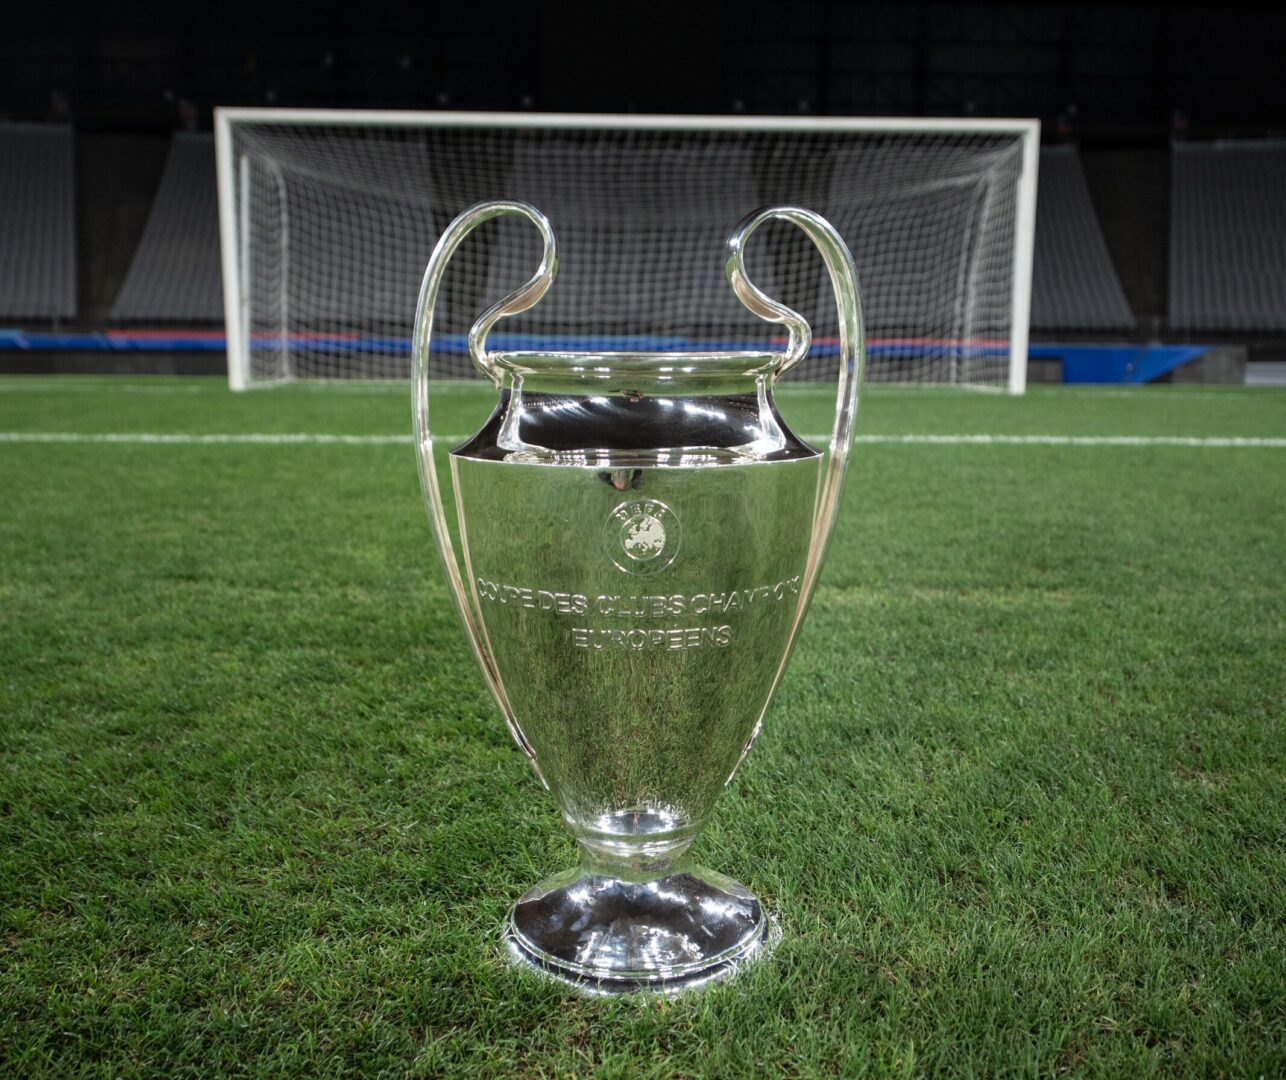 Se completa la Jornada 5 de la UEFA Champions League